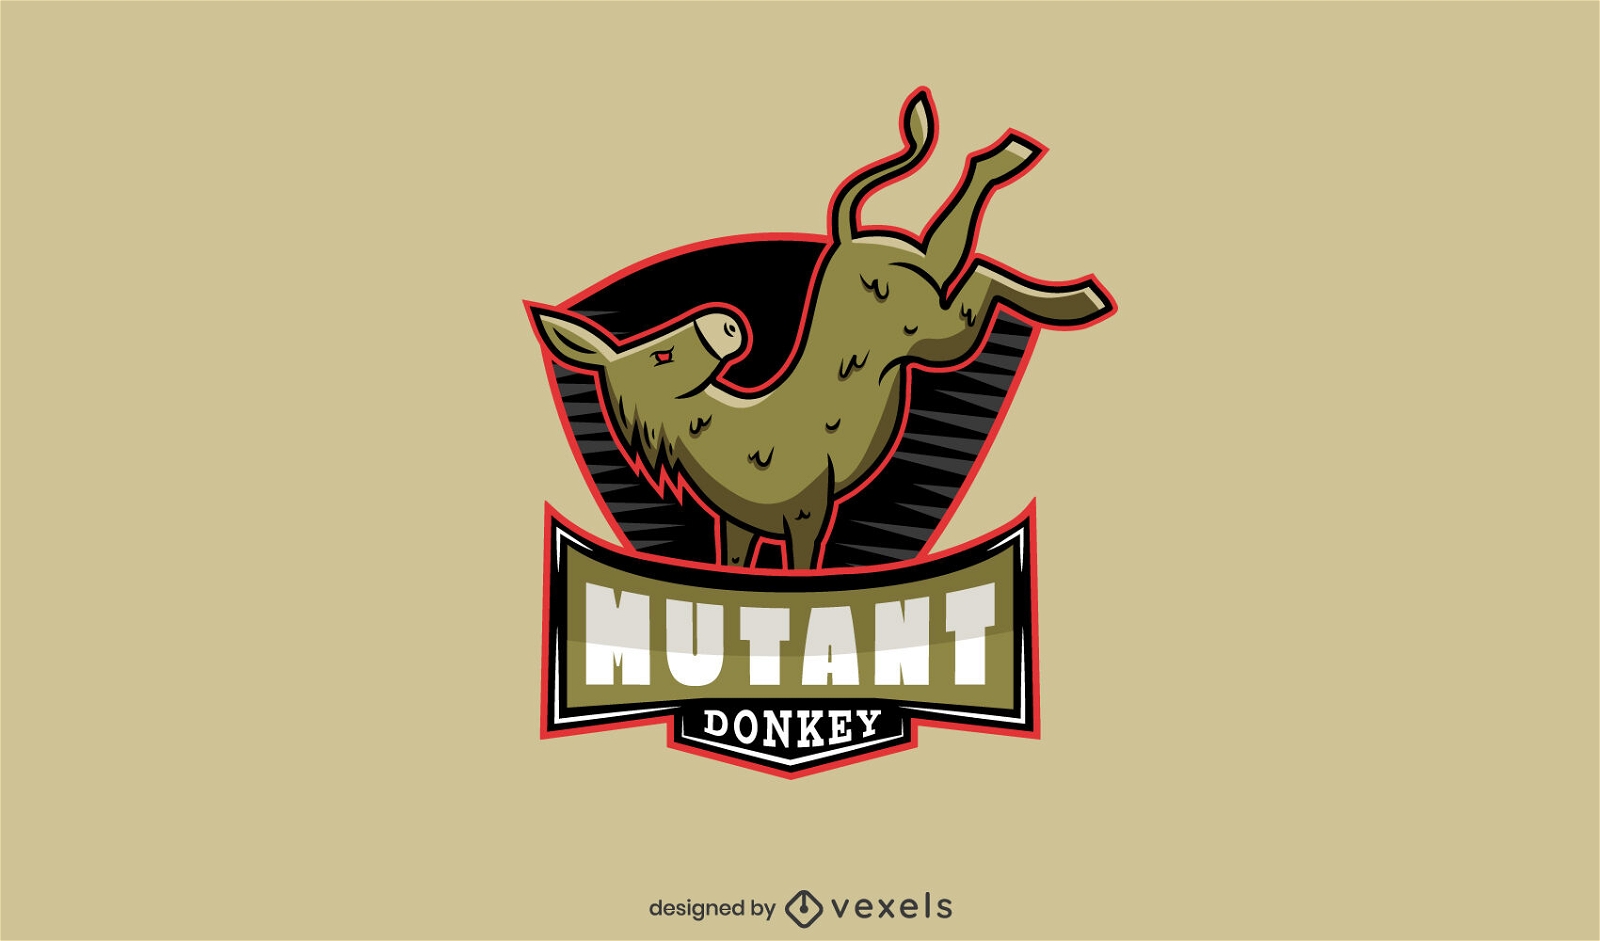 Donkey kicking logo design